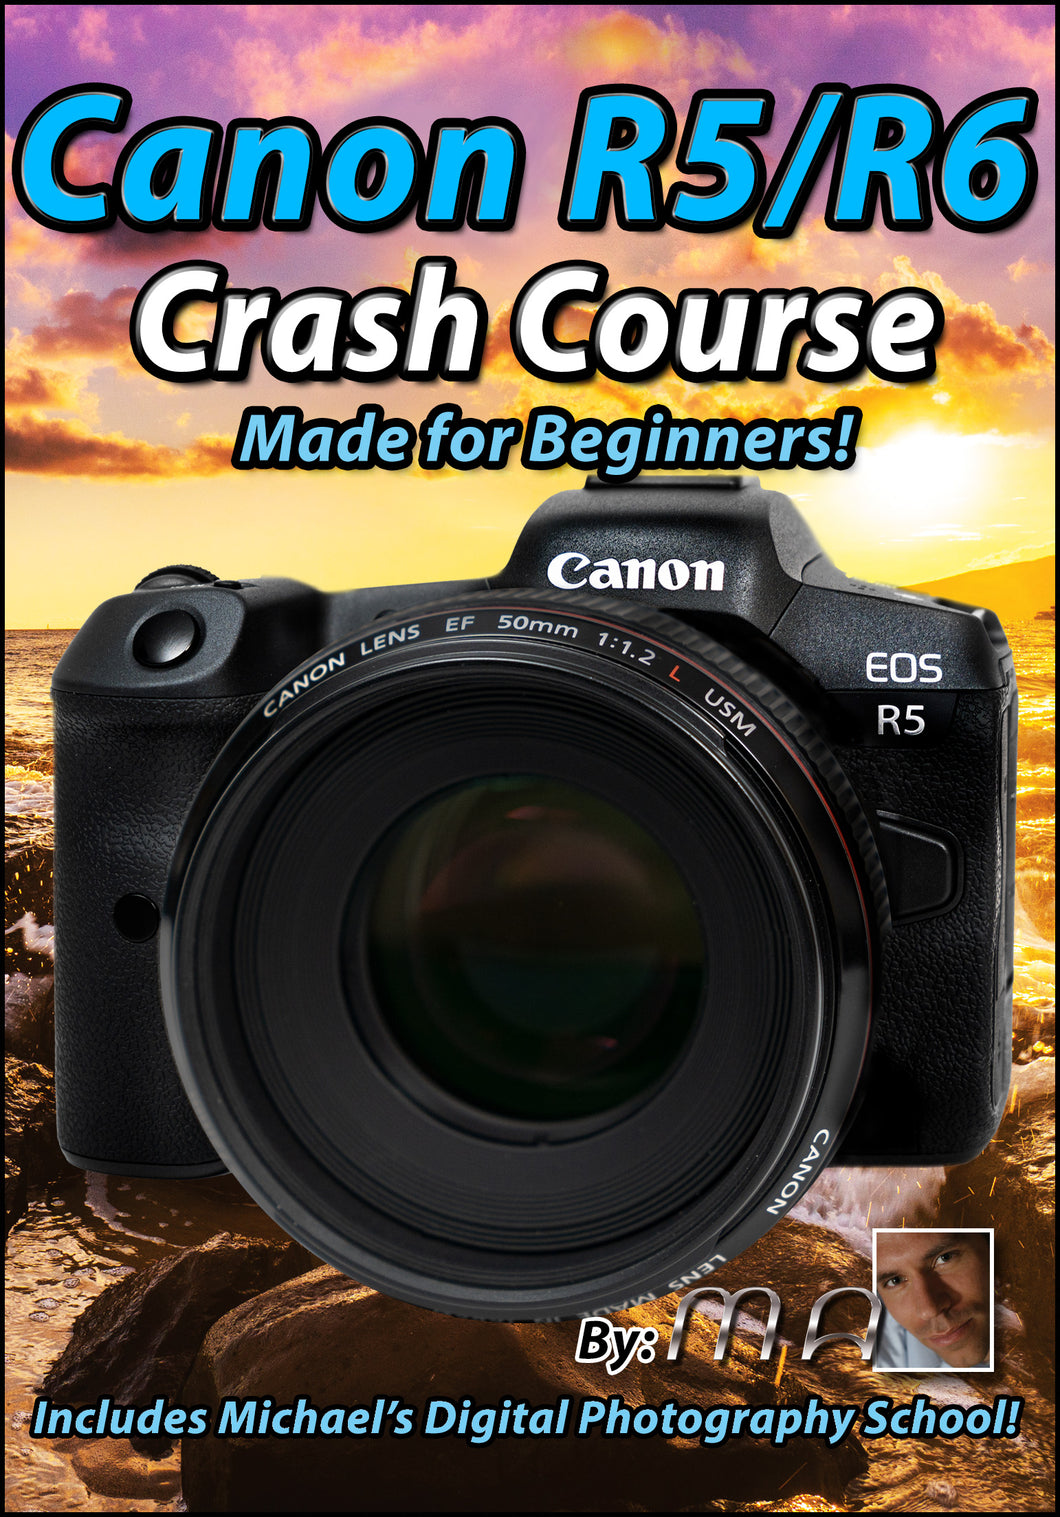 Canon R5 / R6 Crash Course Tutorial Camera Training Video!